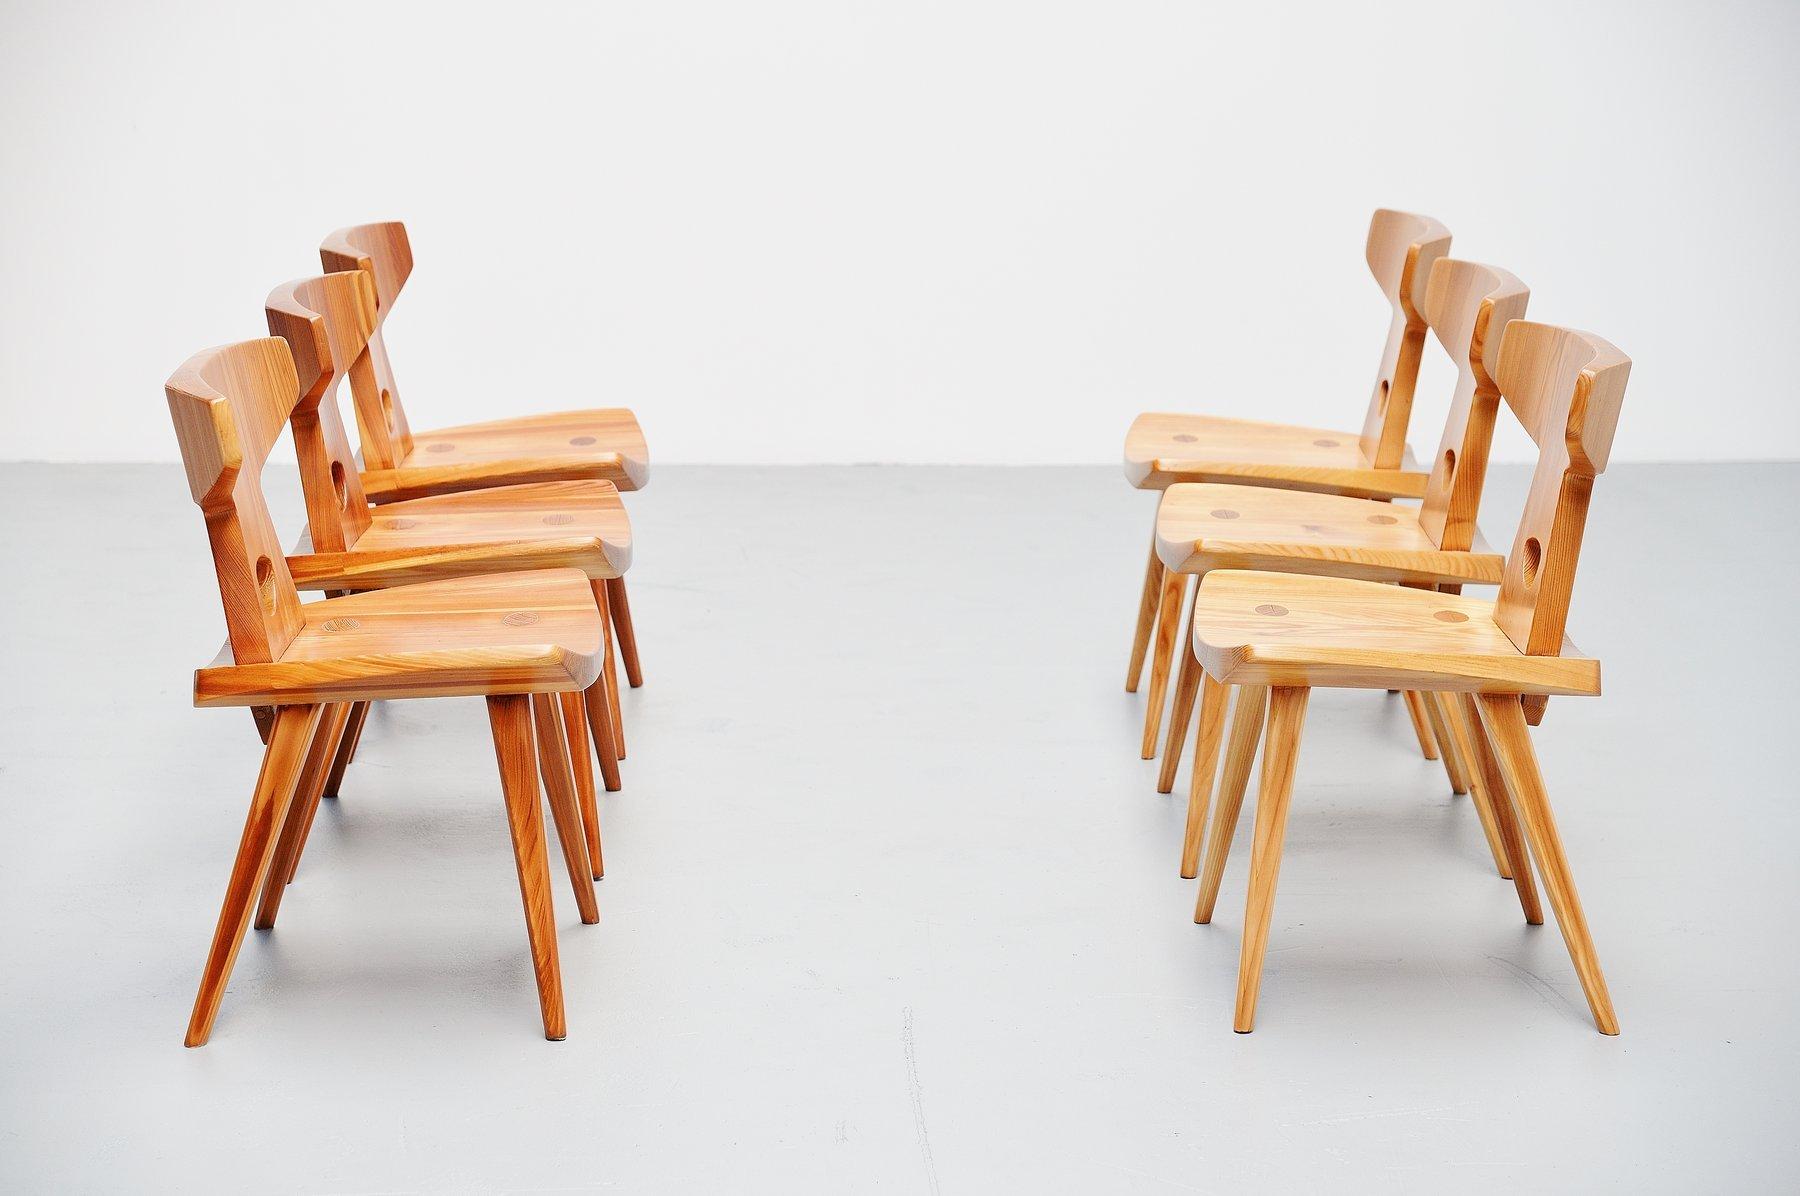 Mid-20th Century Jacob Kielland-Brandt Chairs for I Christiansen, Denmark, 1960